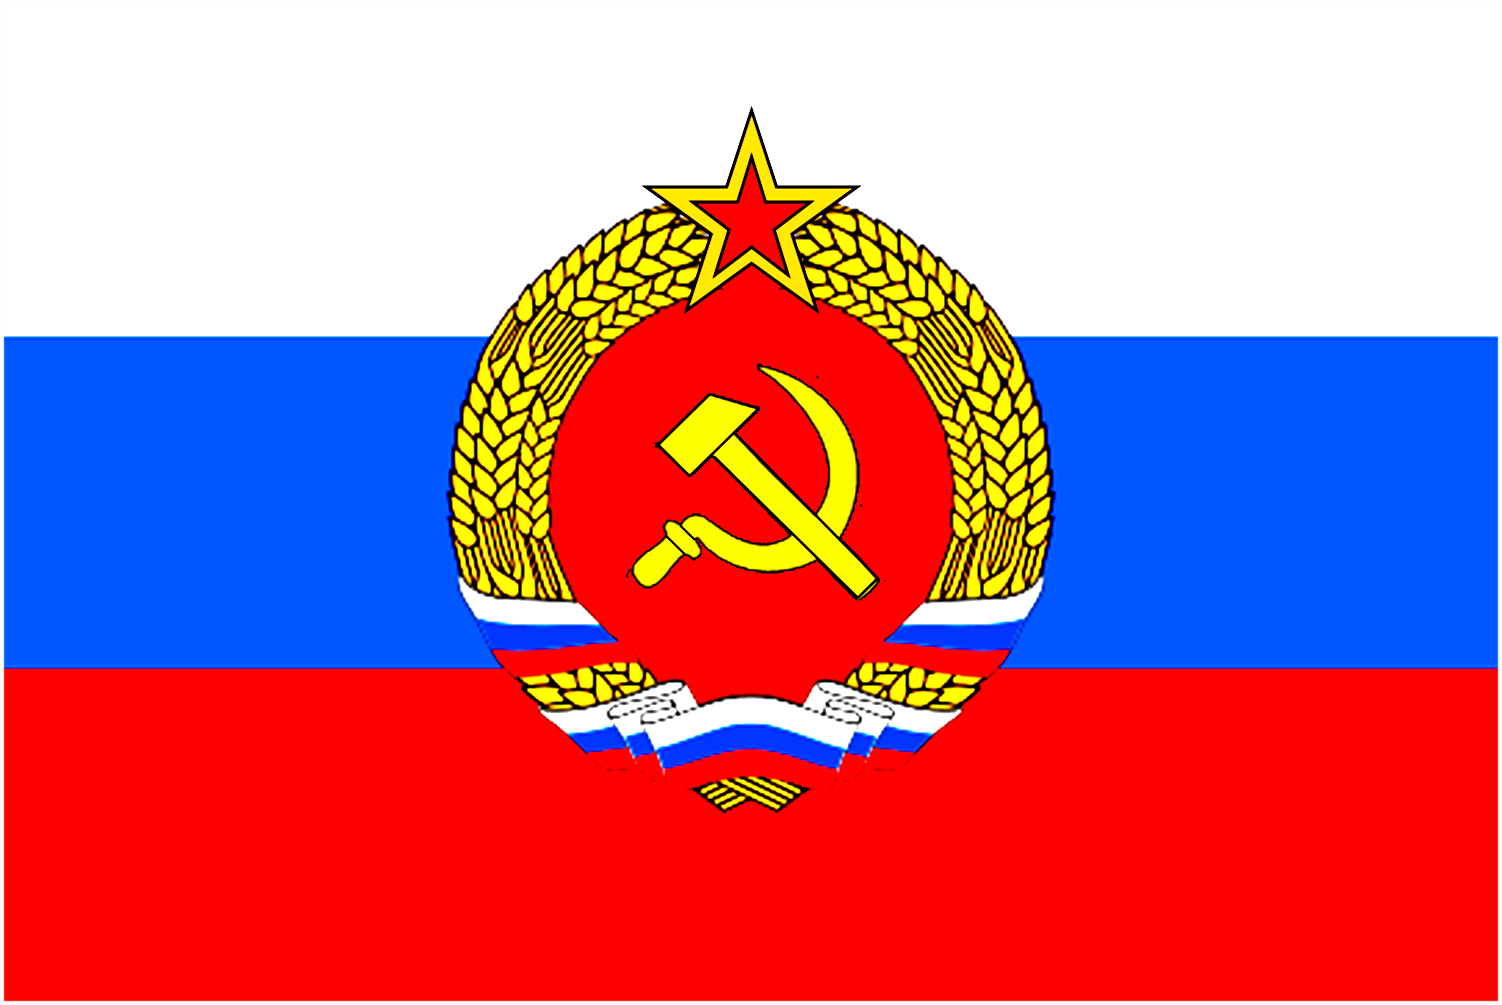 Russia Not the USSR: West No Longer Capitalist Democratic